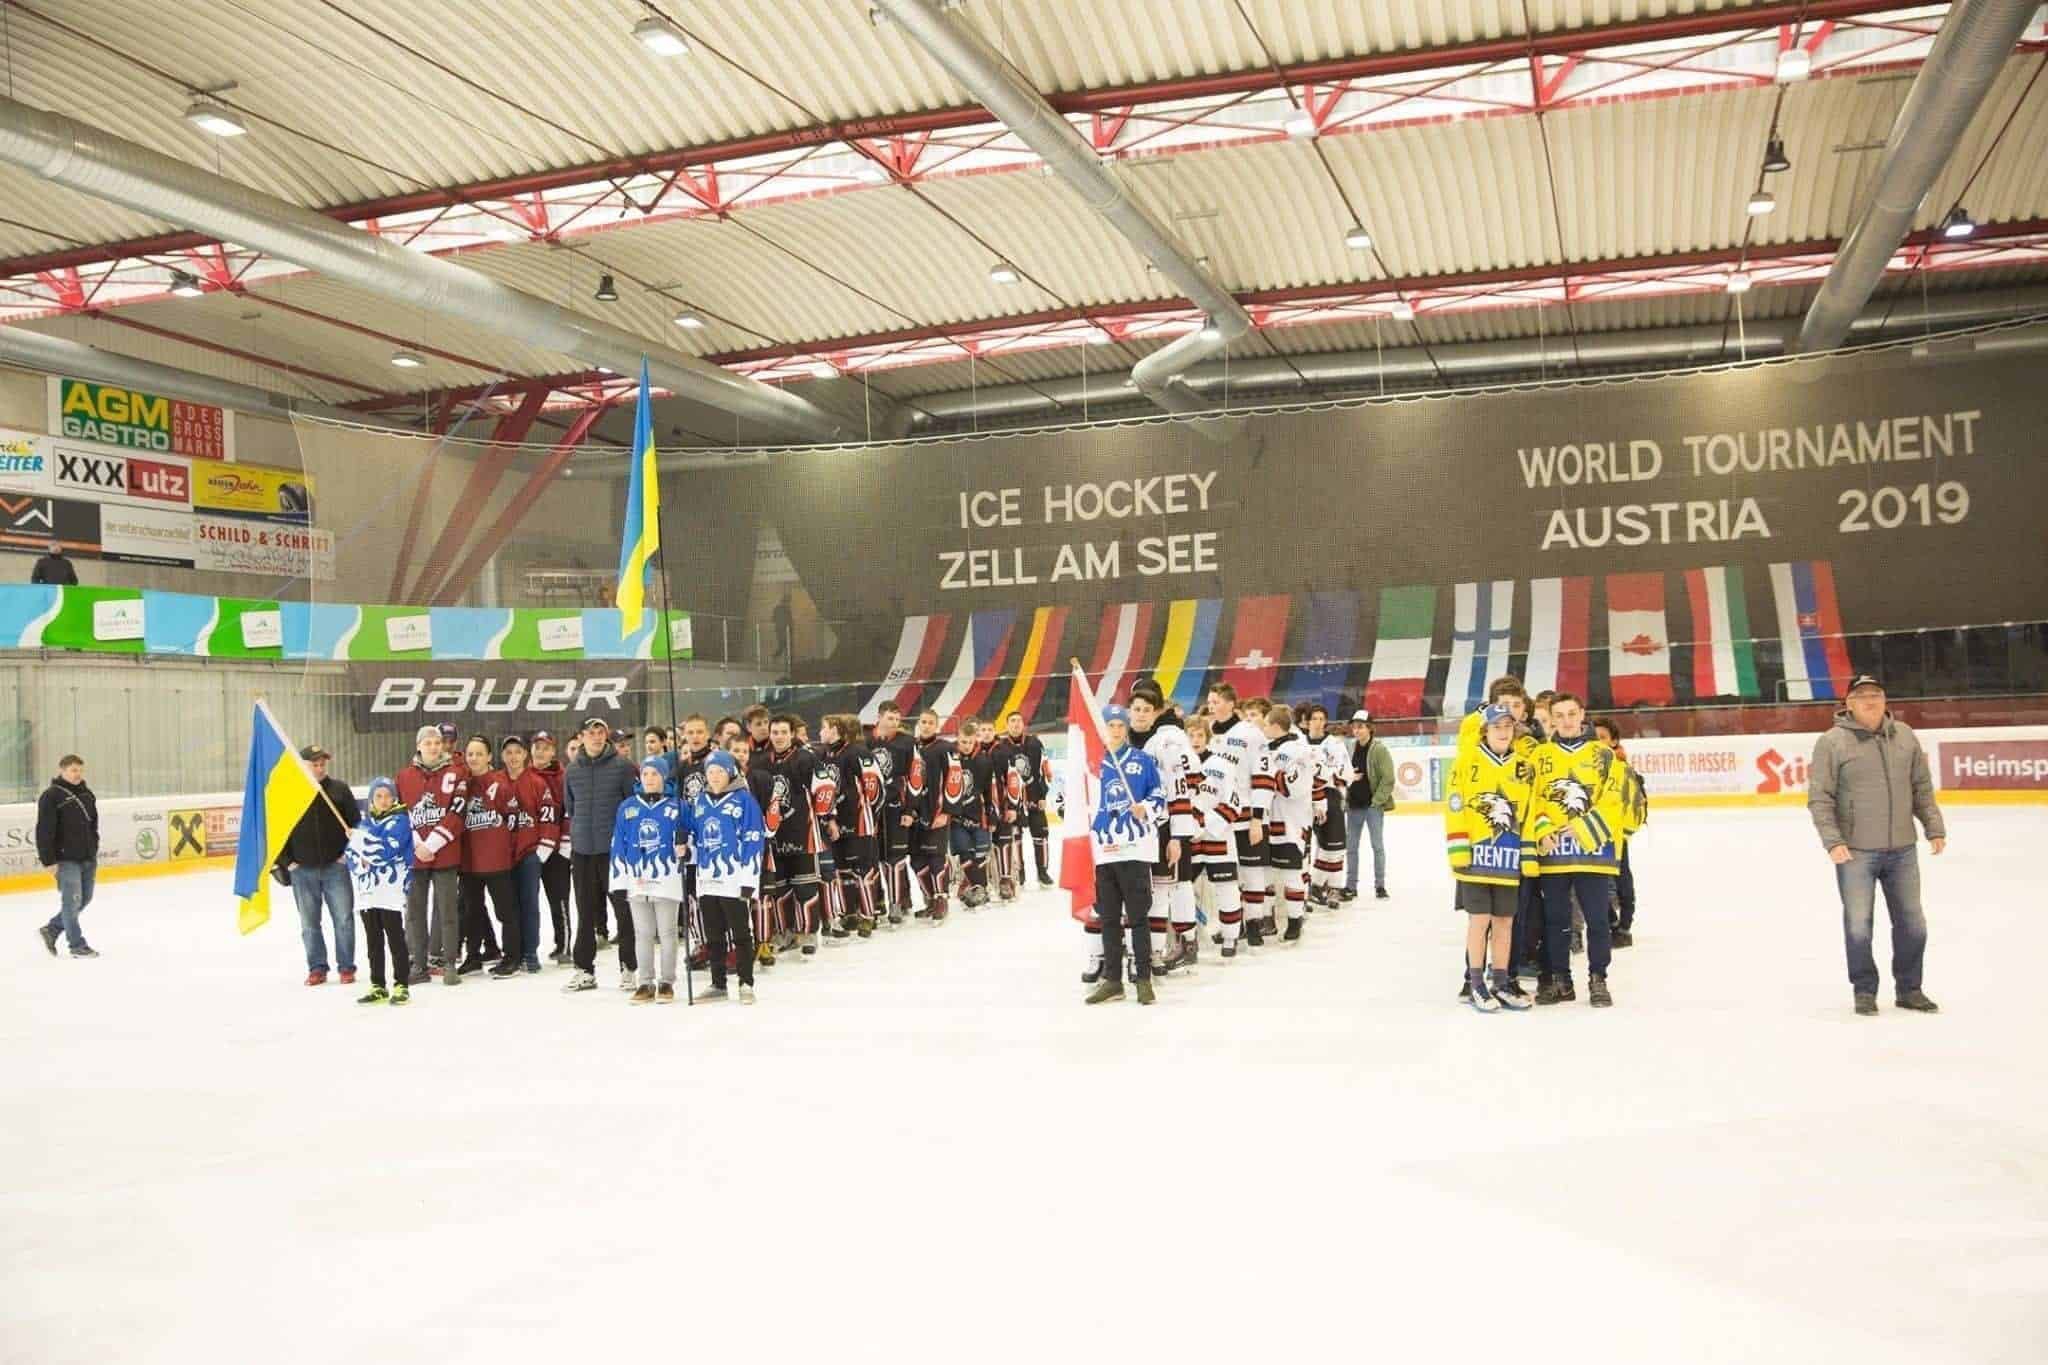 Eishockey World Tournament 2020